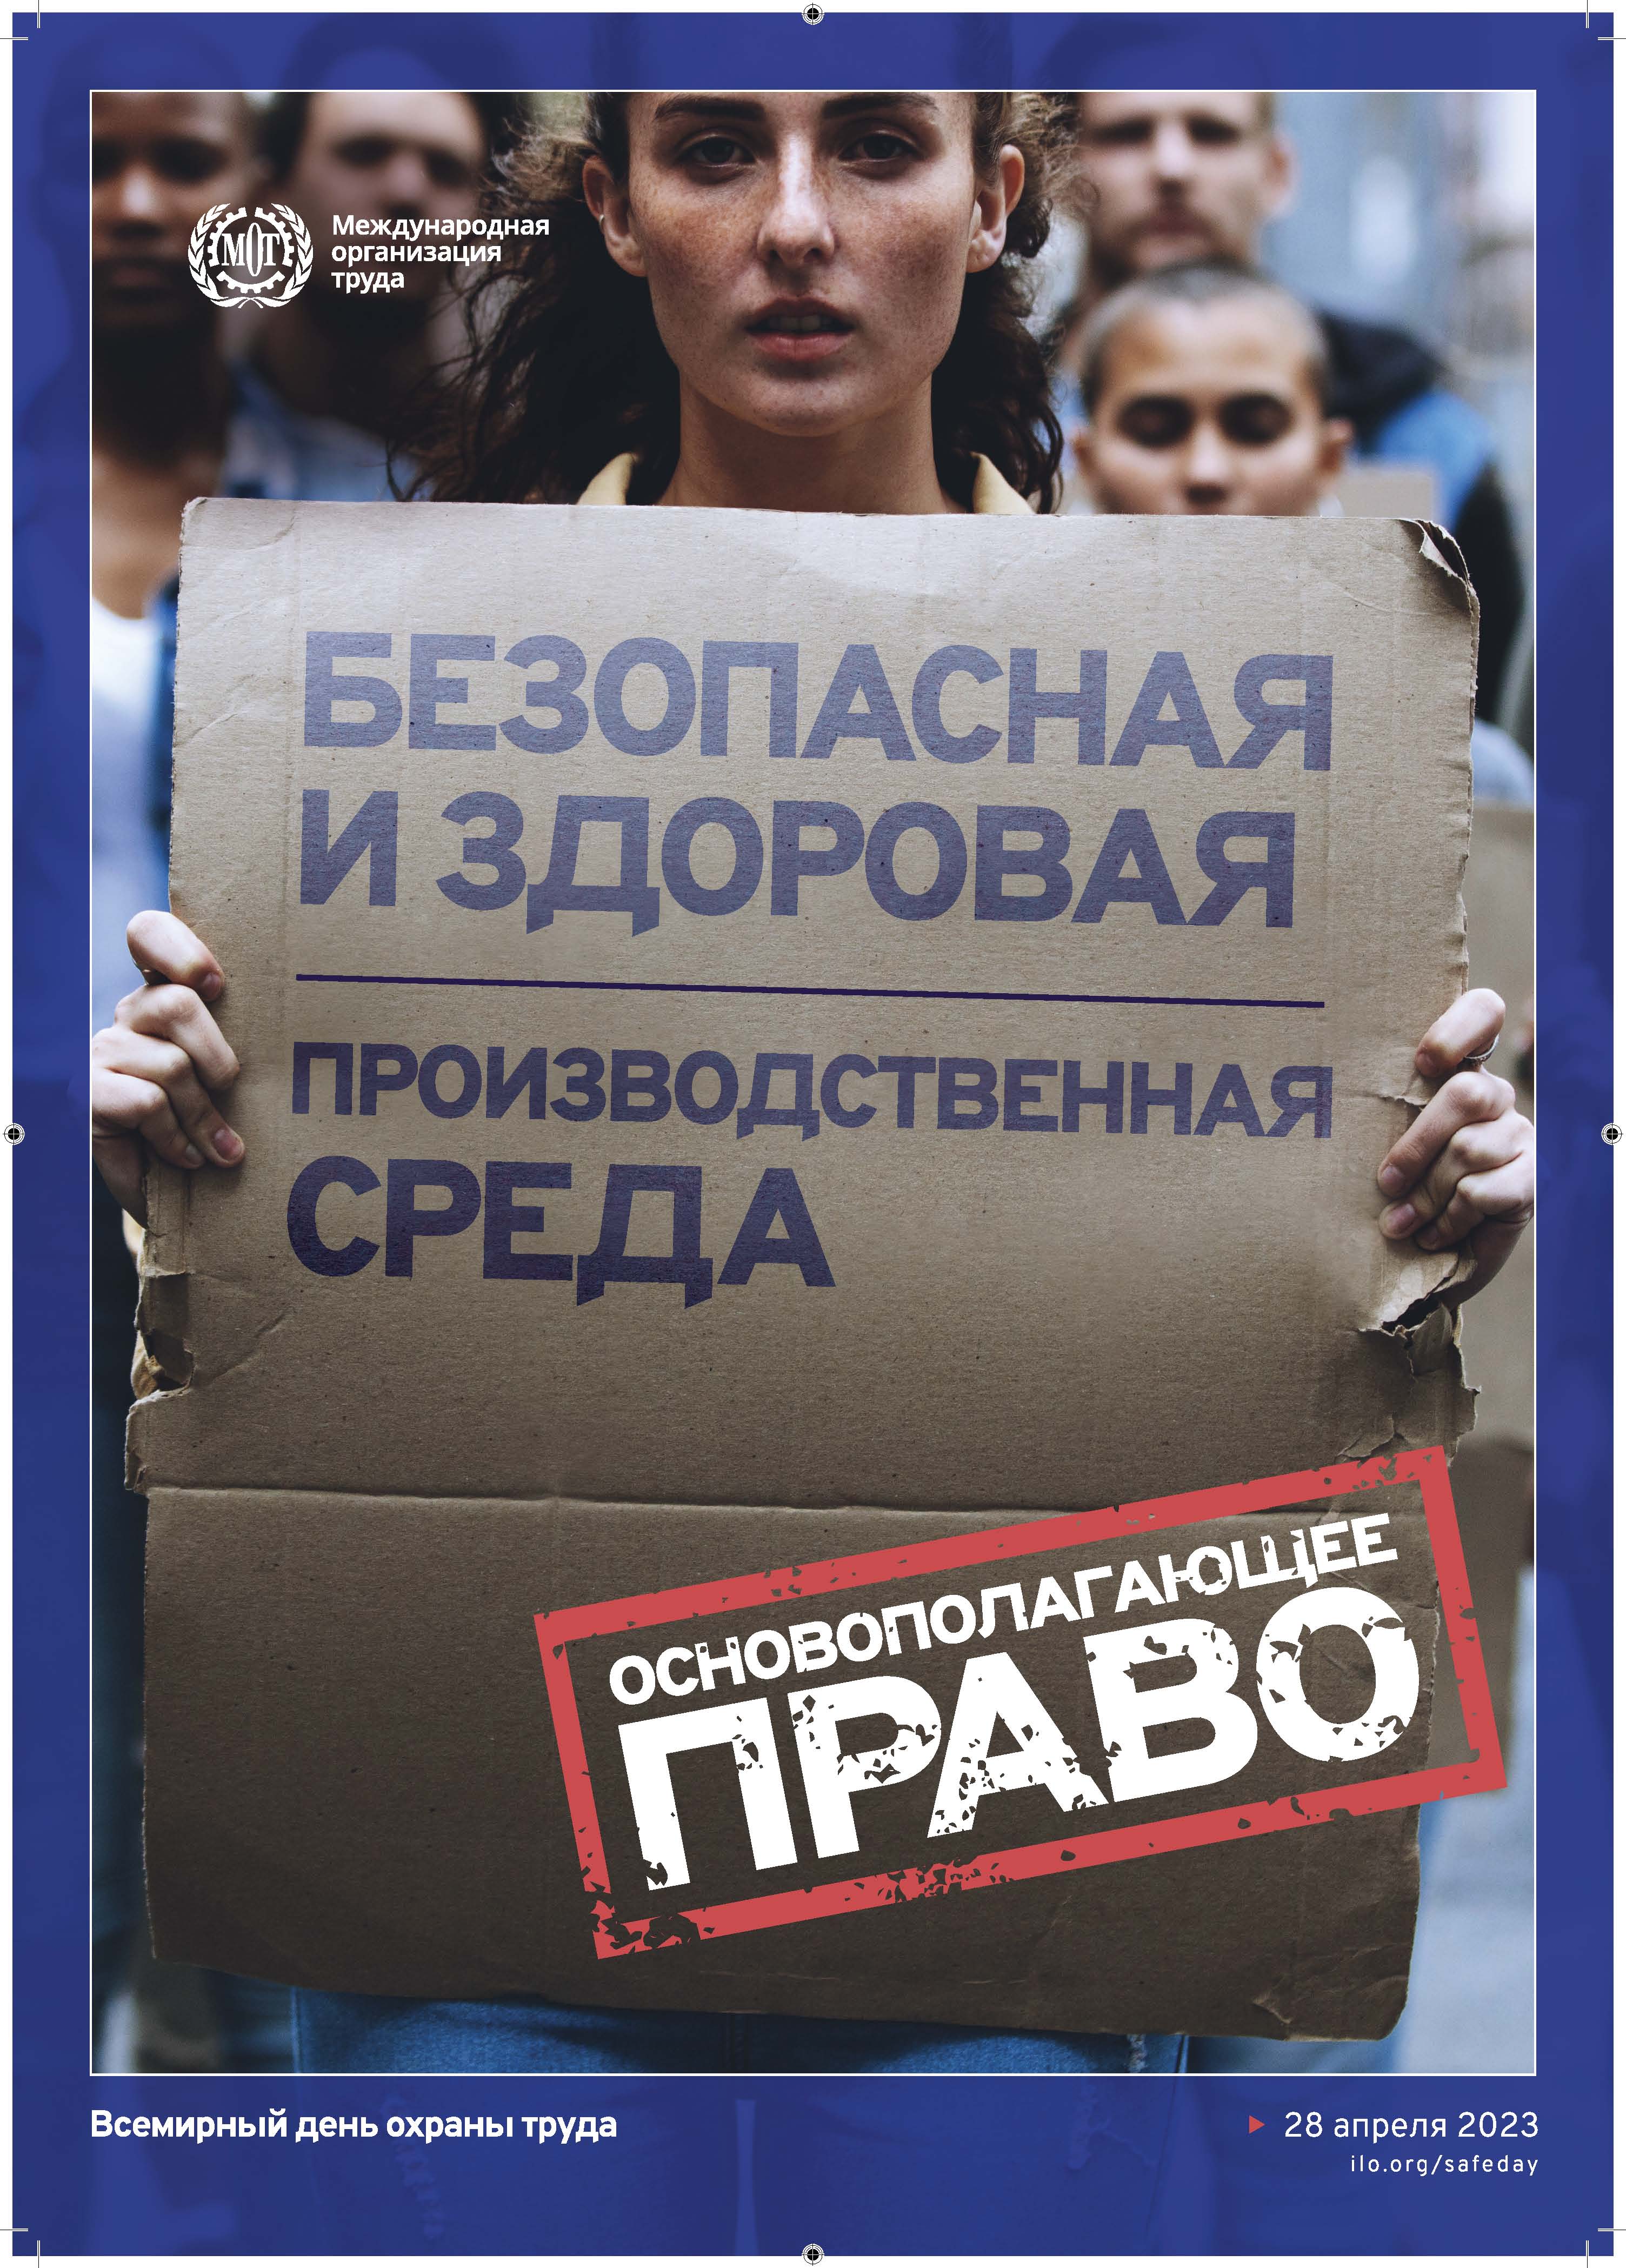 Постер ВДОТ 2023 года на русском язык 